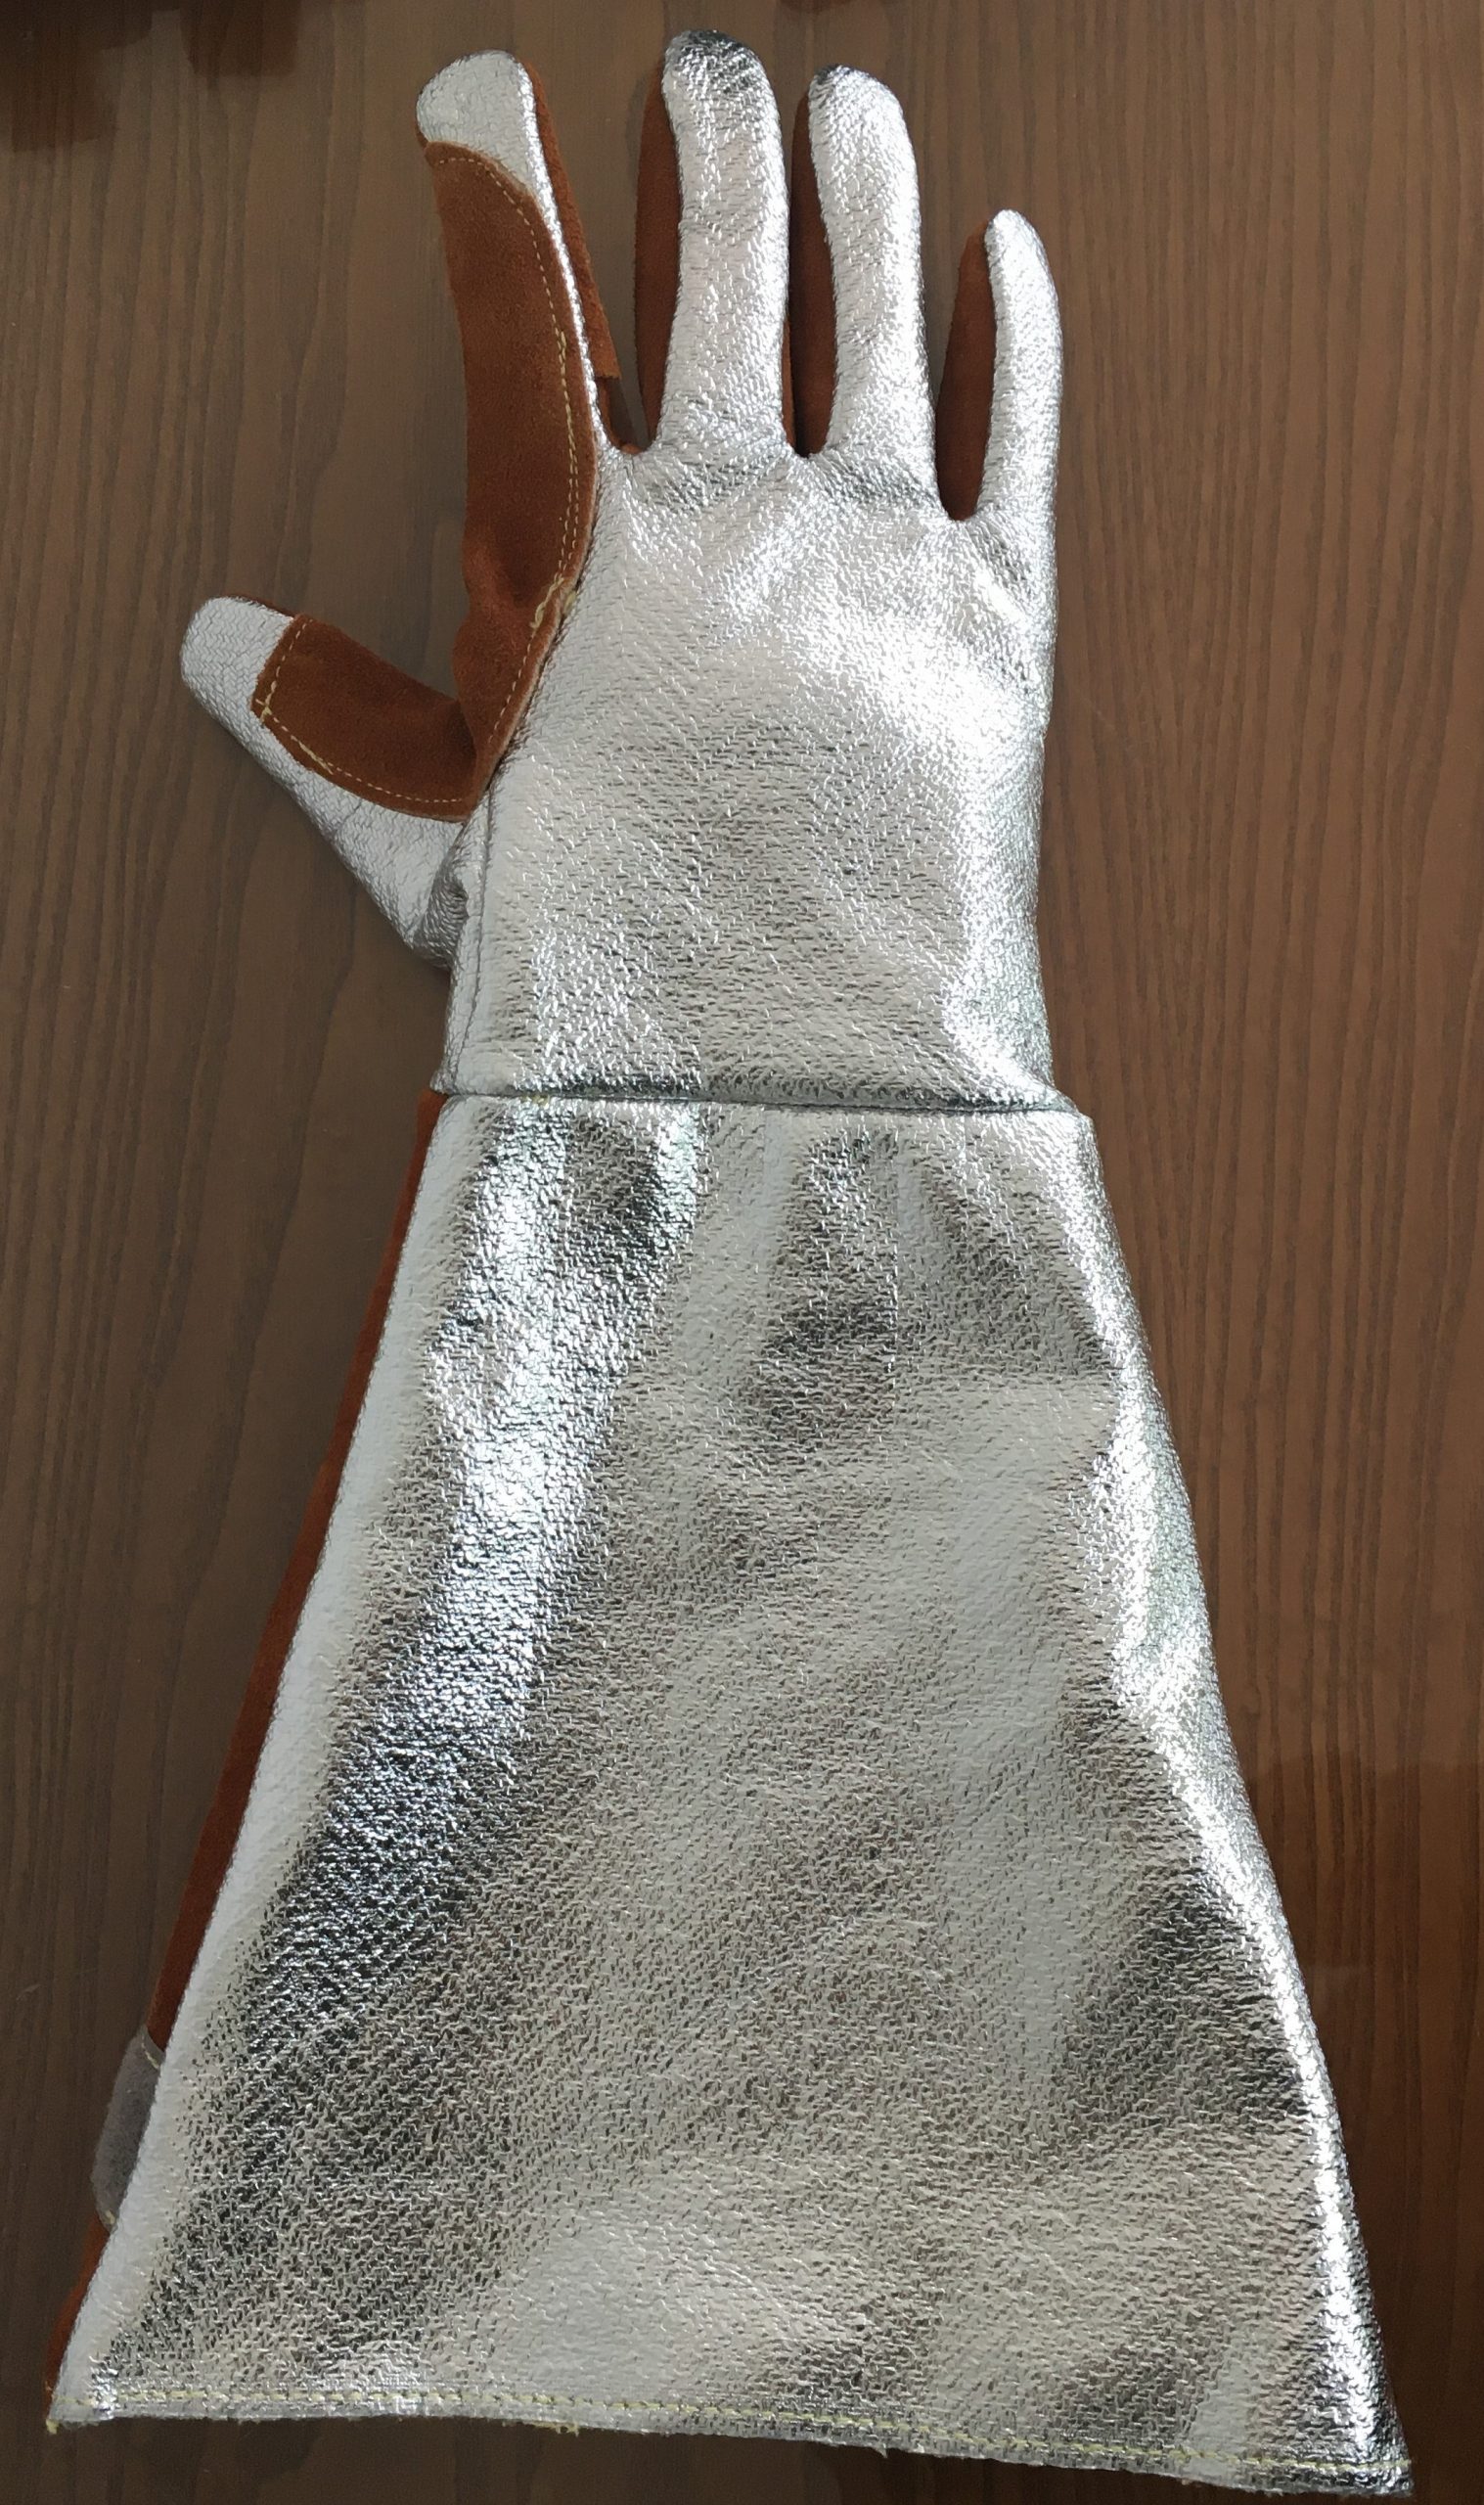 Aluminized Gloves Size 8